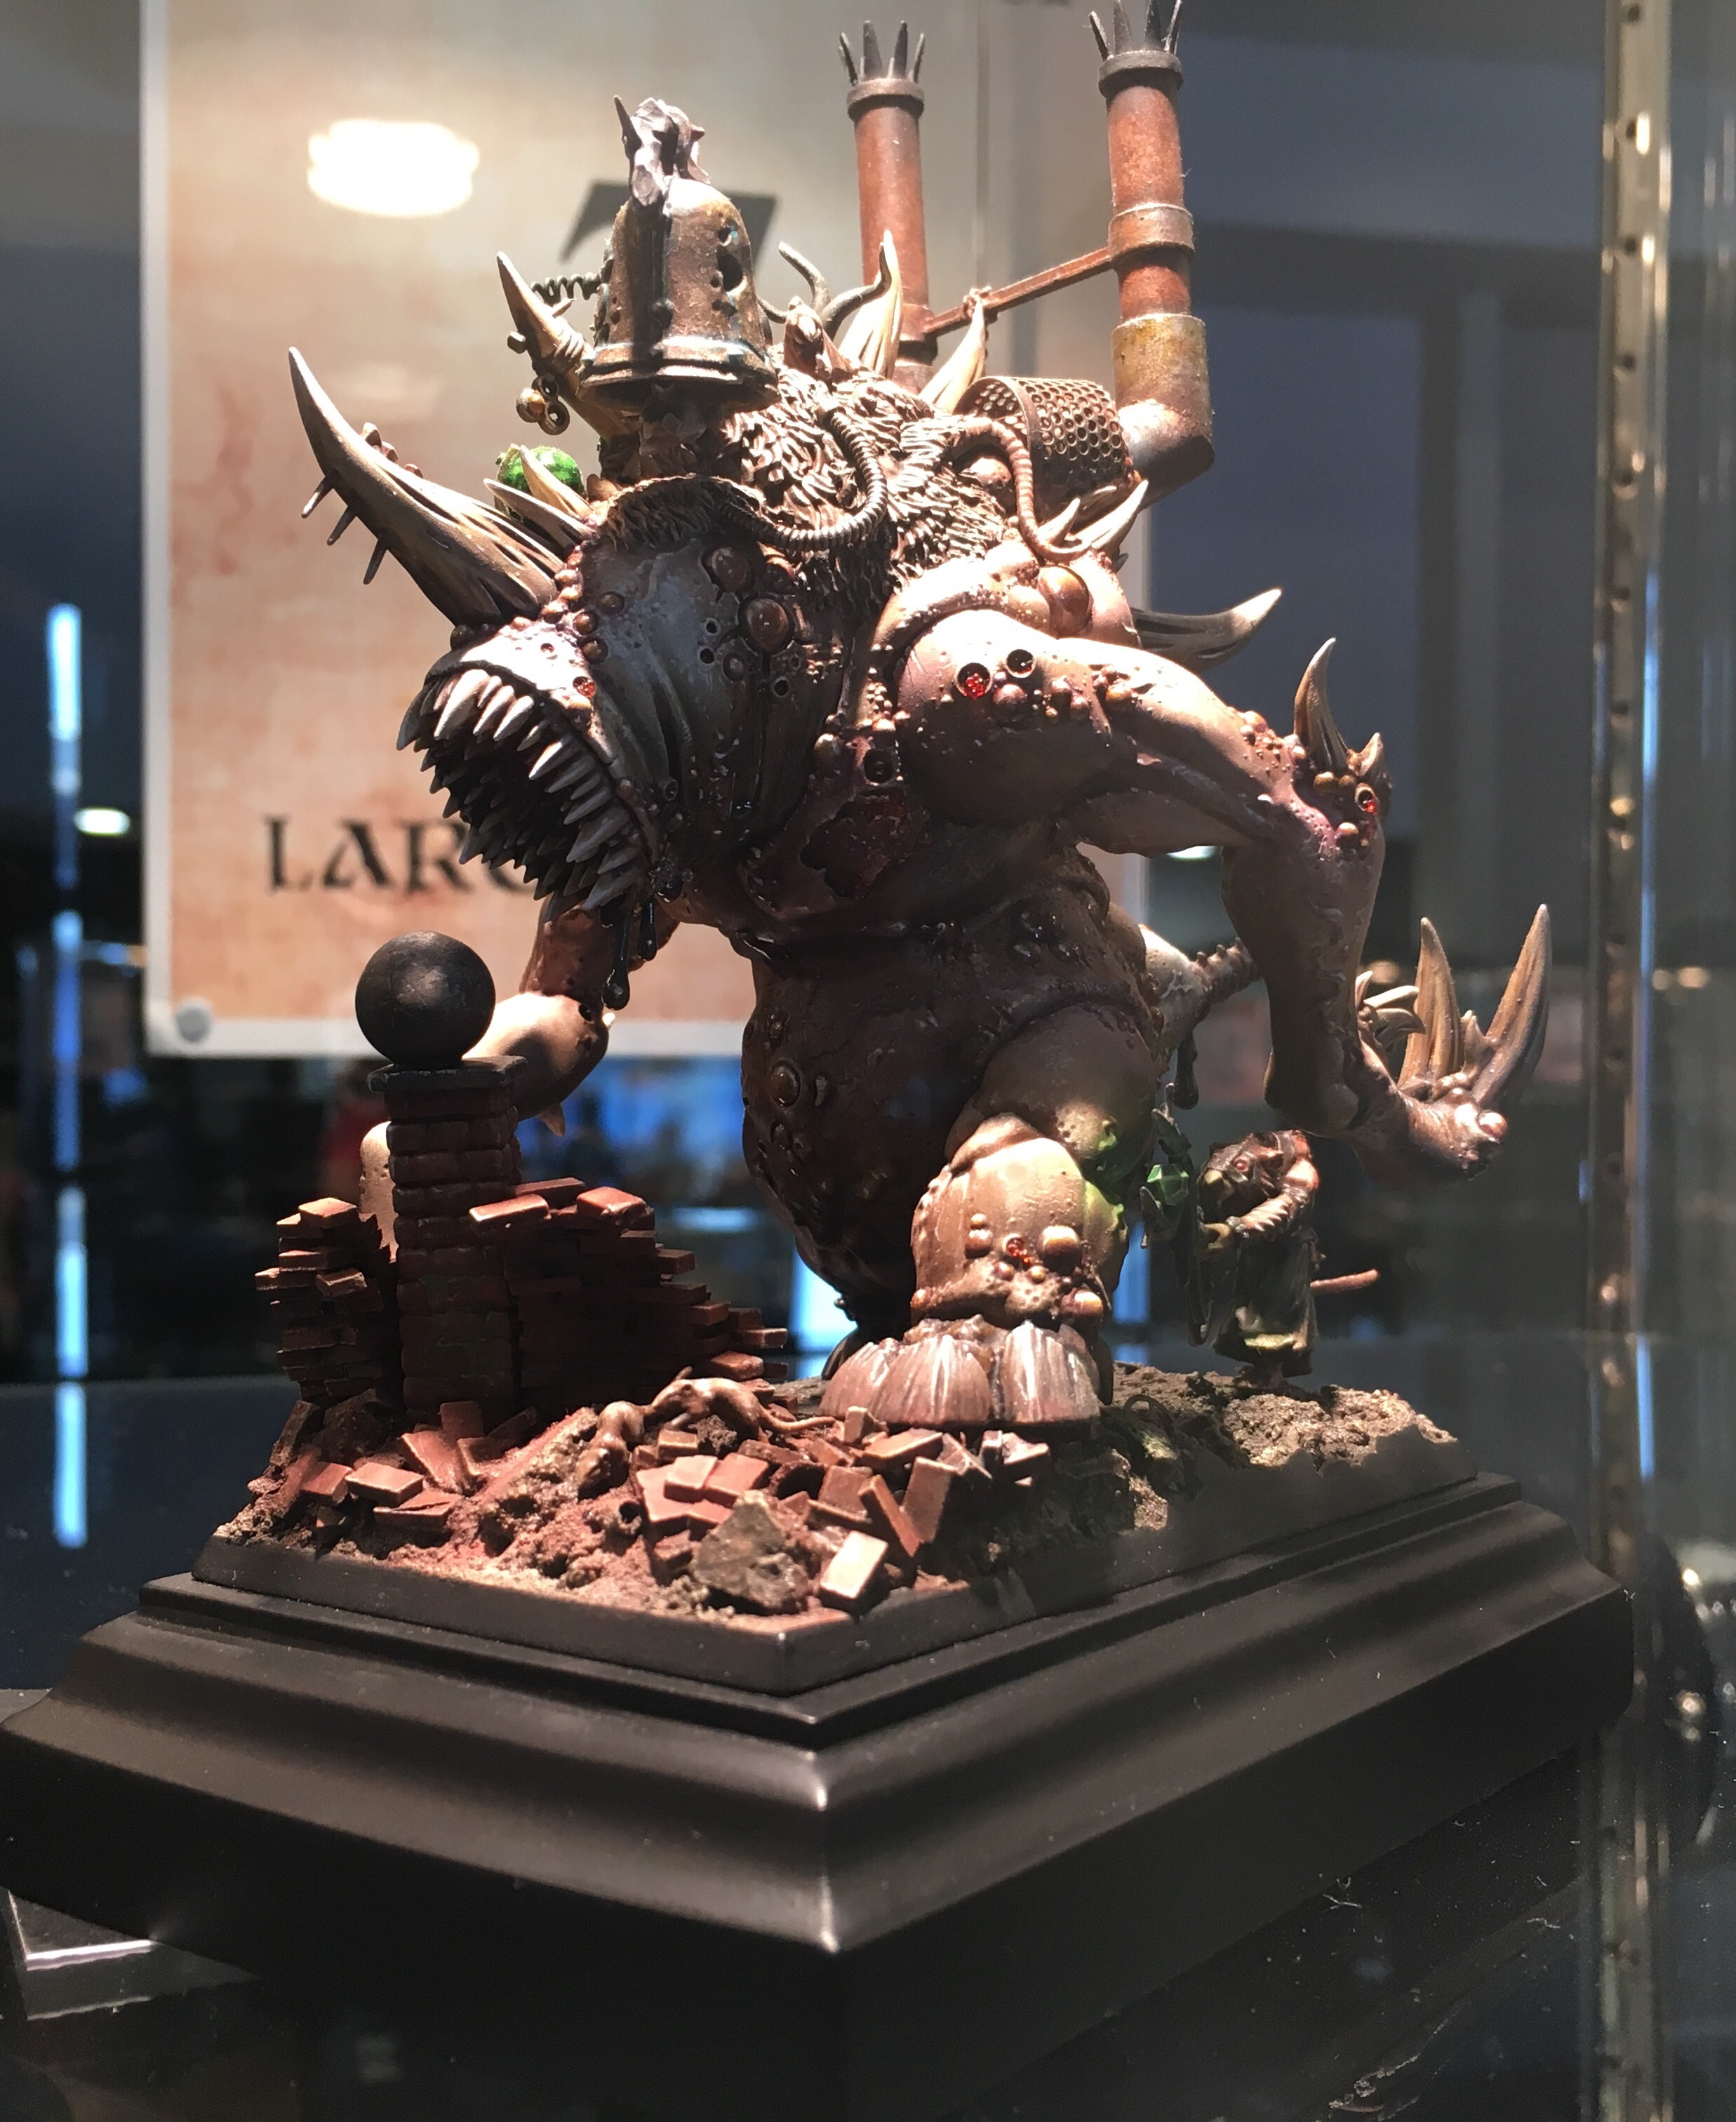 Golden Demon 2017 a Warhammer Large Monster